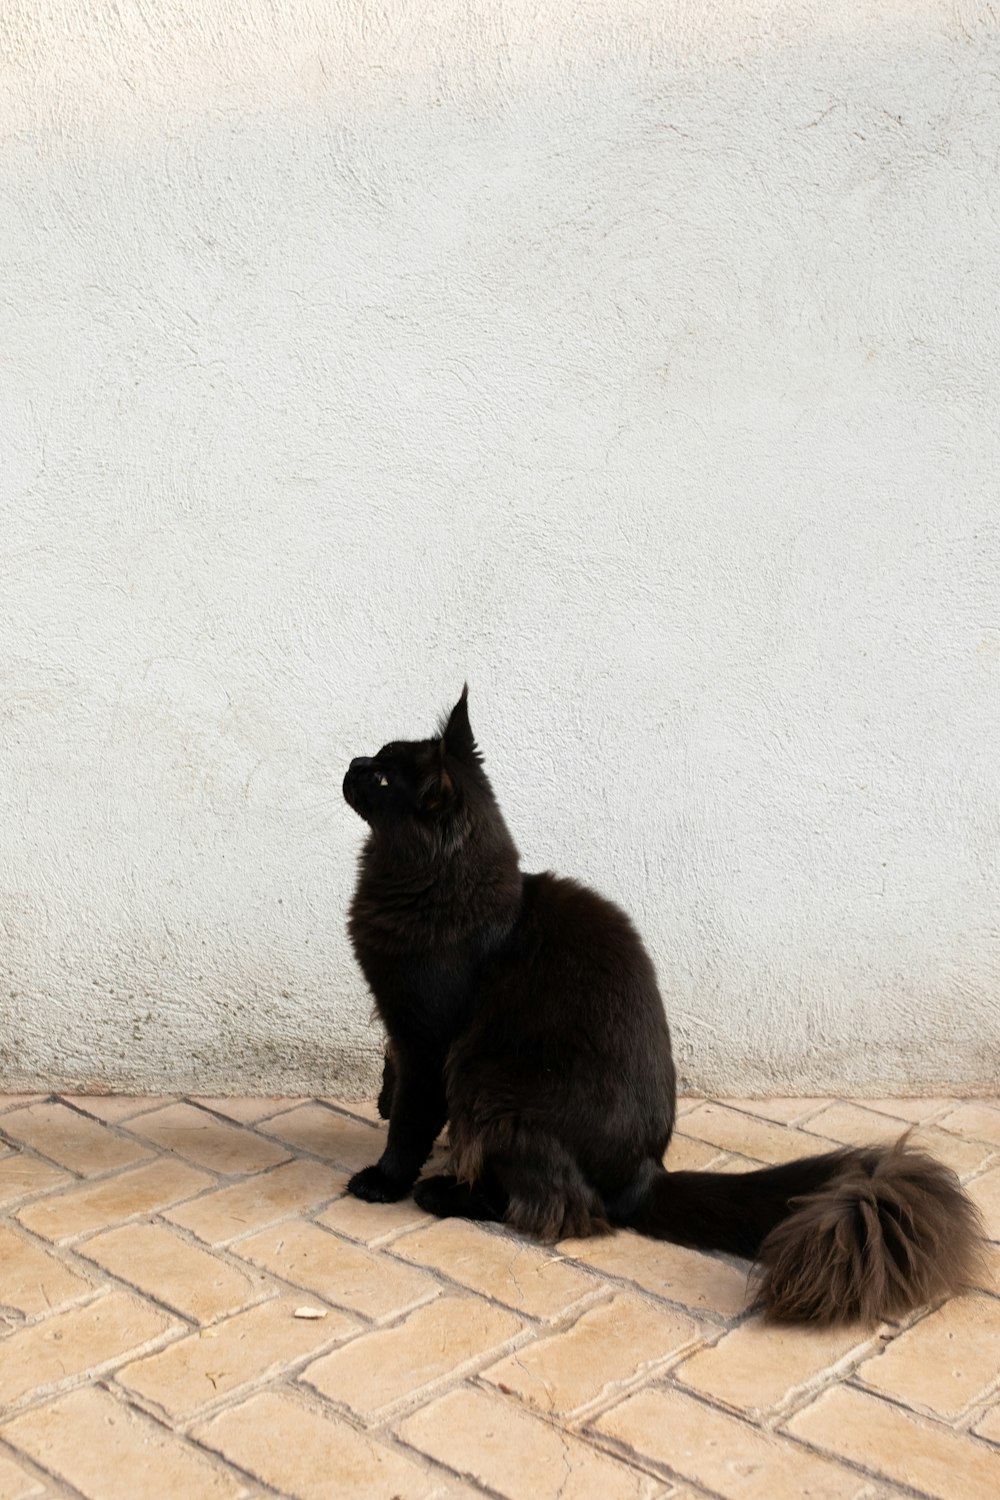 a black cat sitting on a tile floor